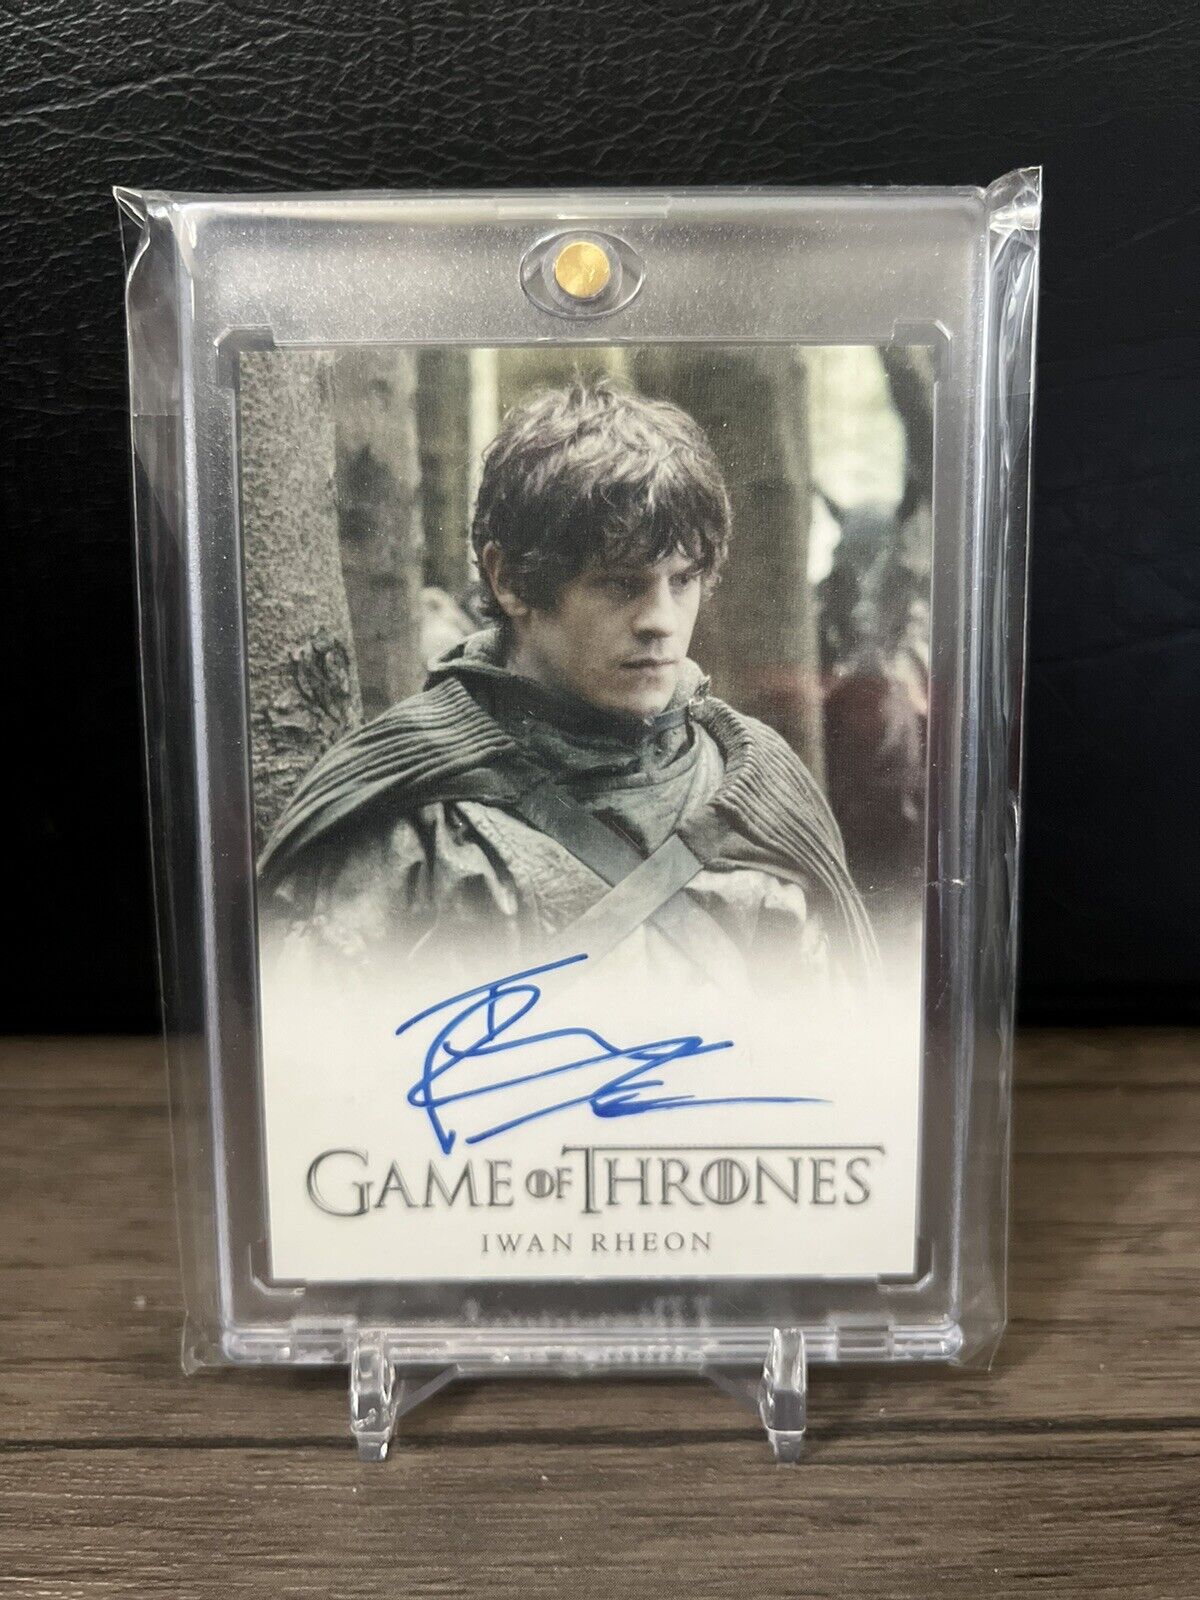 2013 Game of Thrones Iwan Rheon Full Bleed Autograph Ramsay Bolton